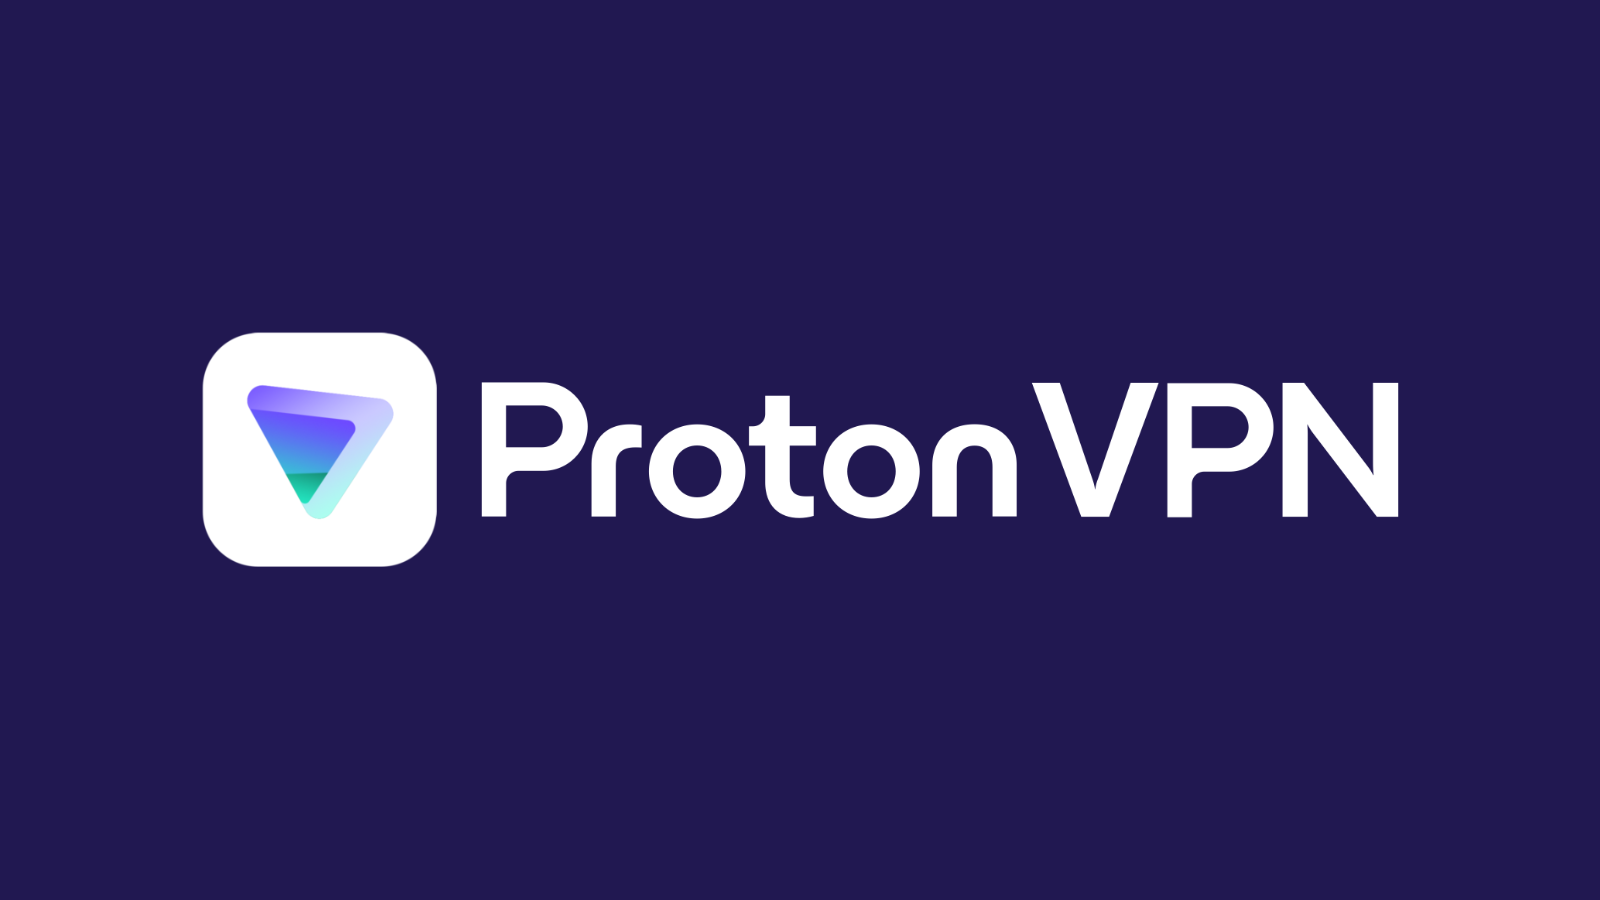 Proton VPN Goes Through a Complete Visual Overhaul - TechNadu